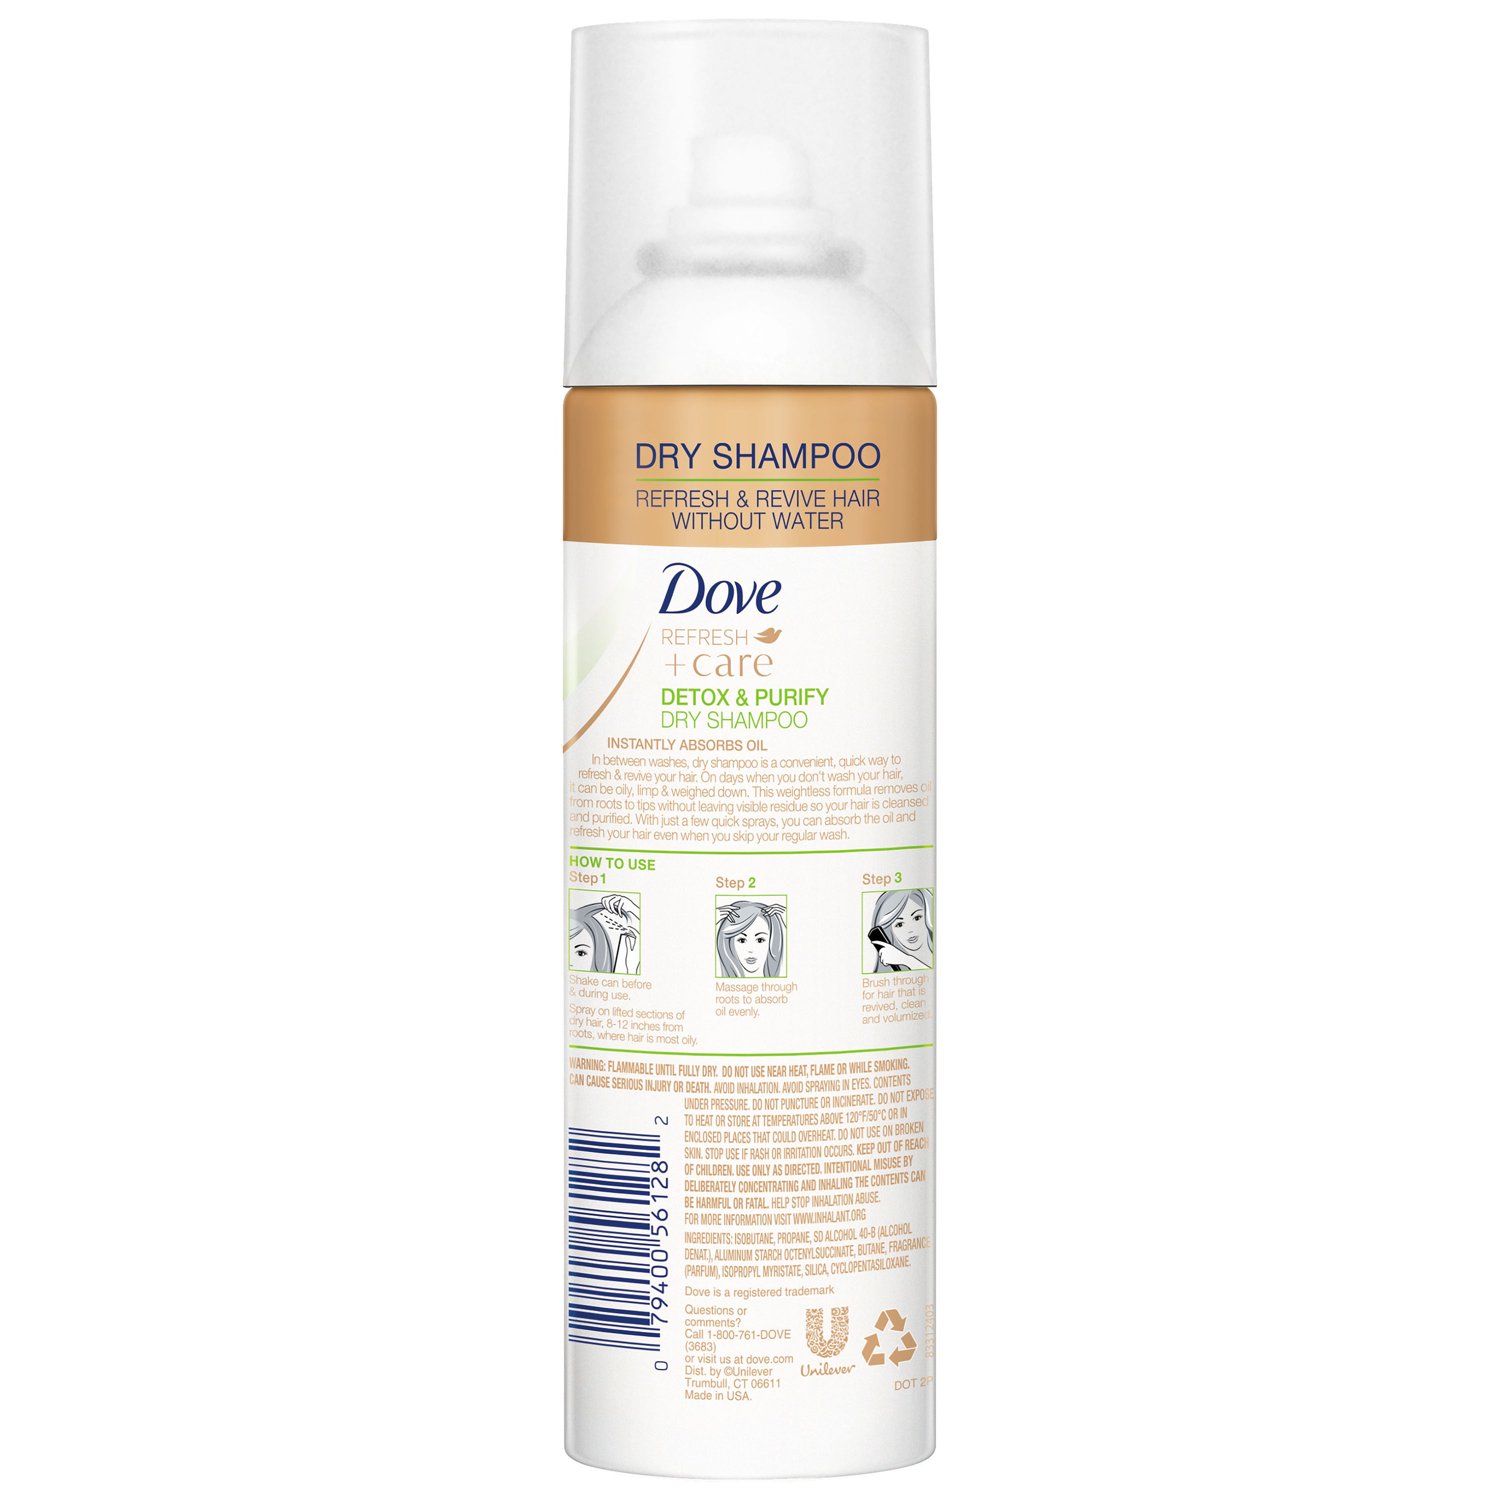 Dove Refresh+Care Detox and Purify Dry Shampoo, 5 oz - image 5 of 9